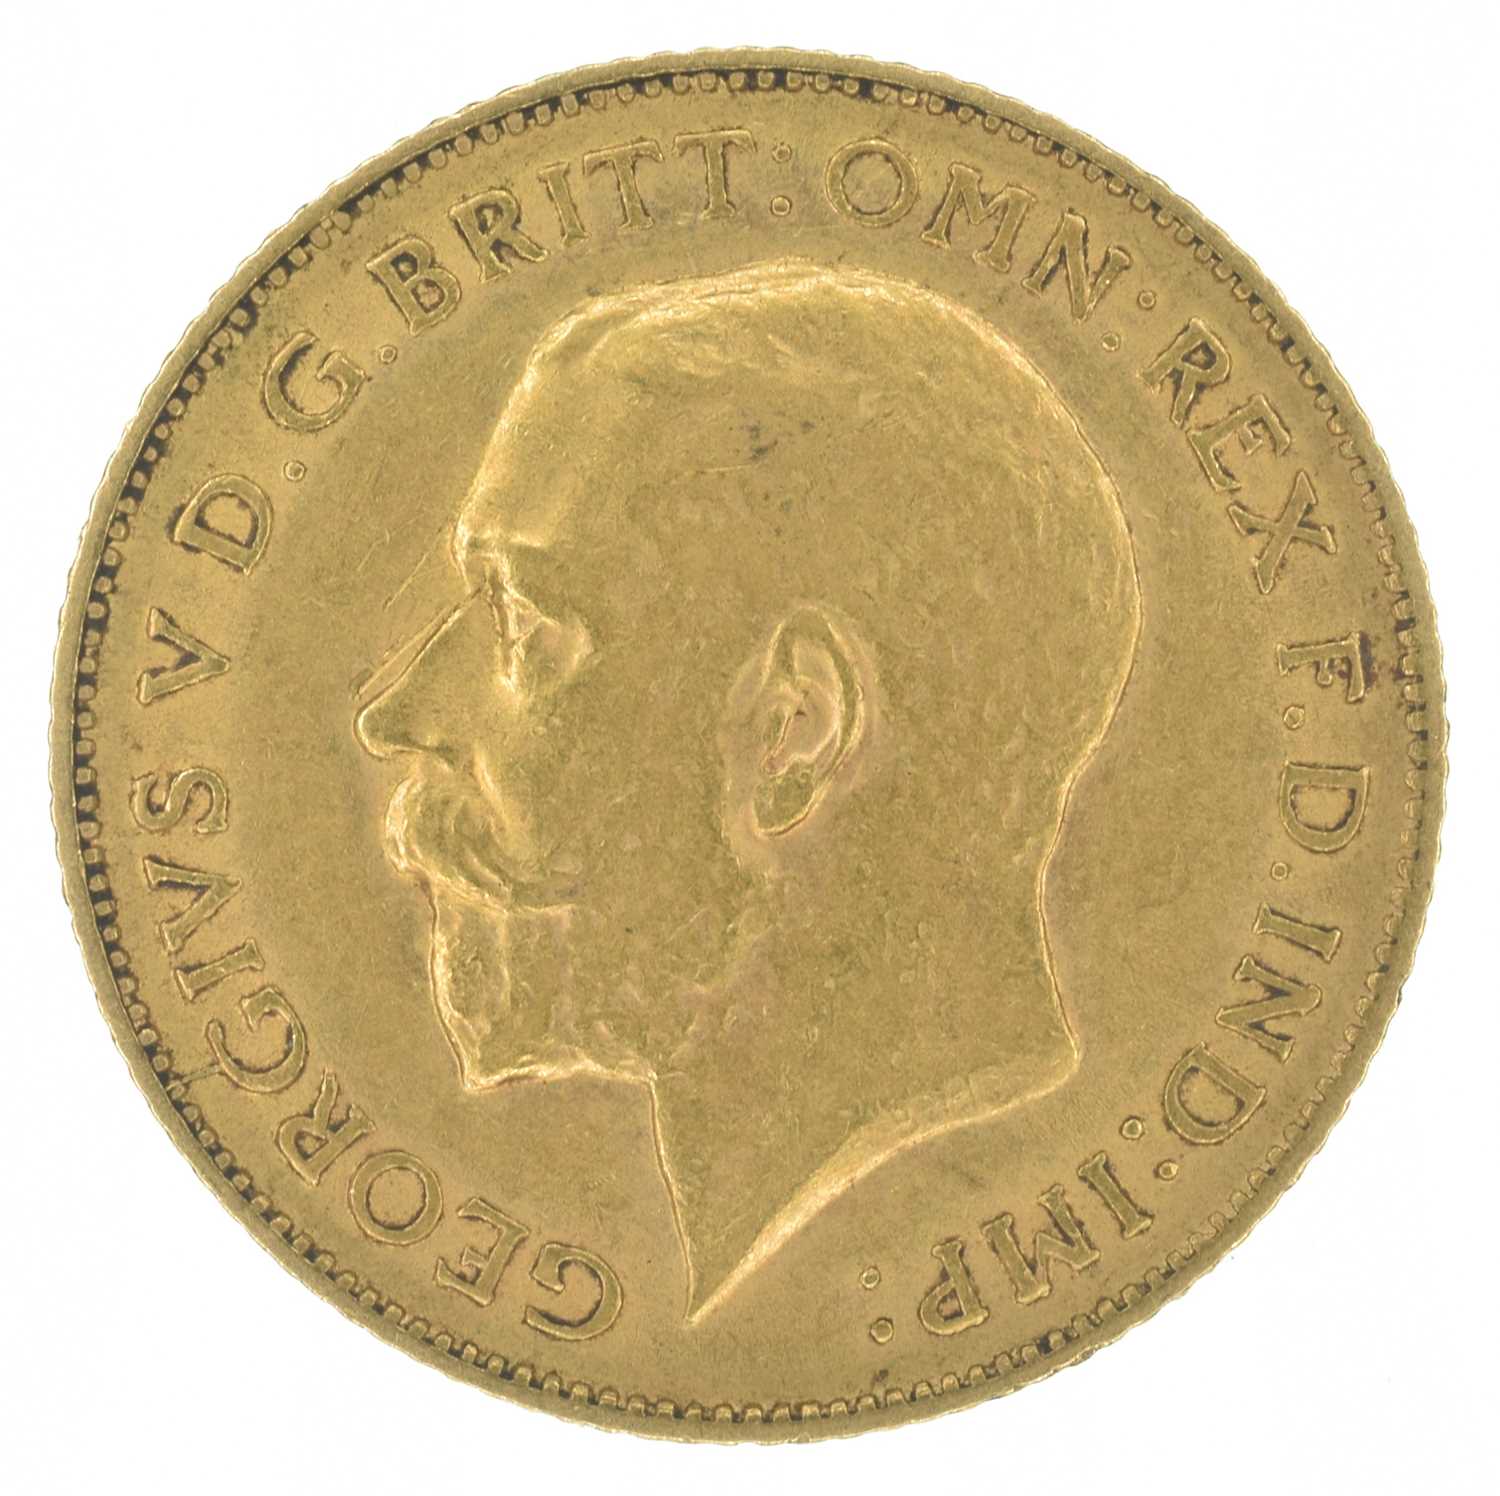 Lot 75 - King George V, Half-Sovereign, 1911, London Mint.